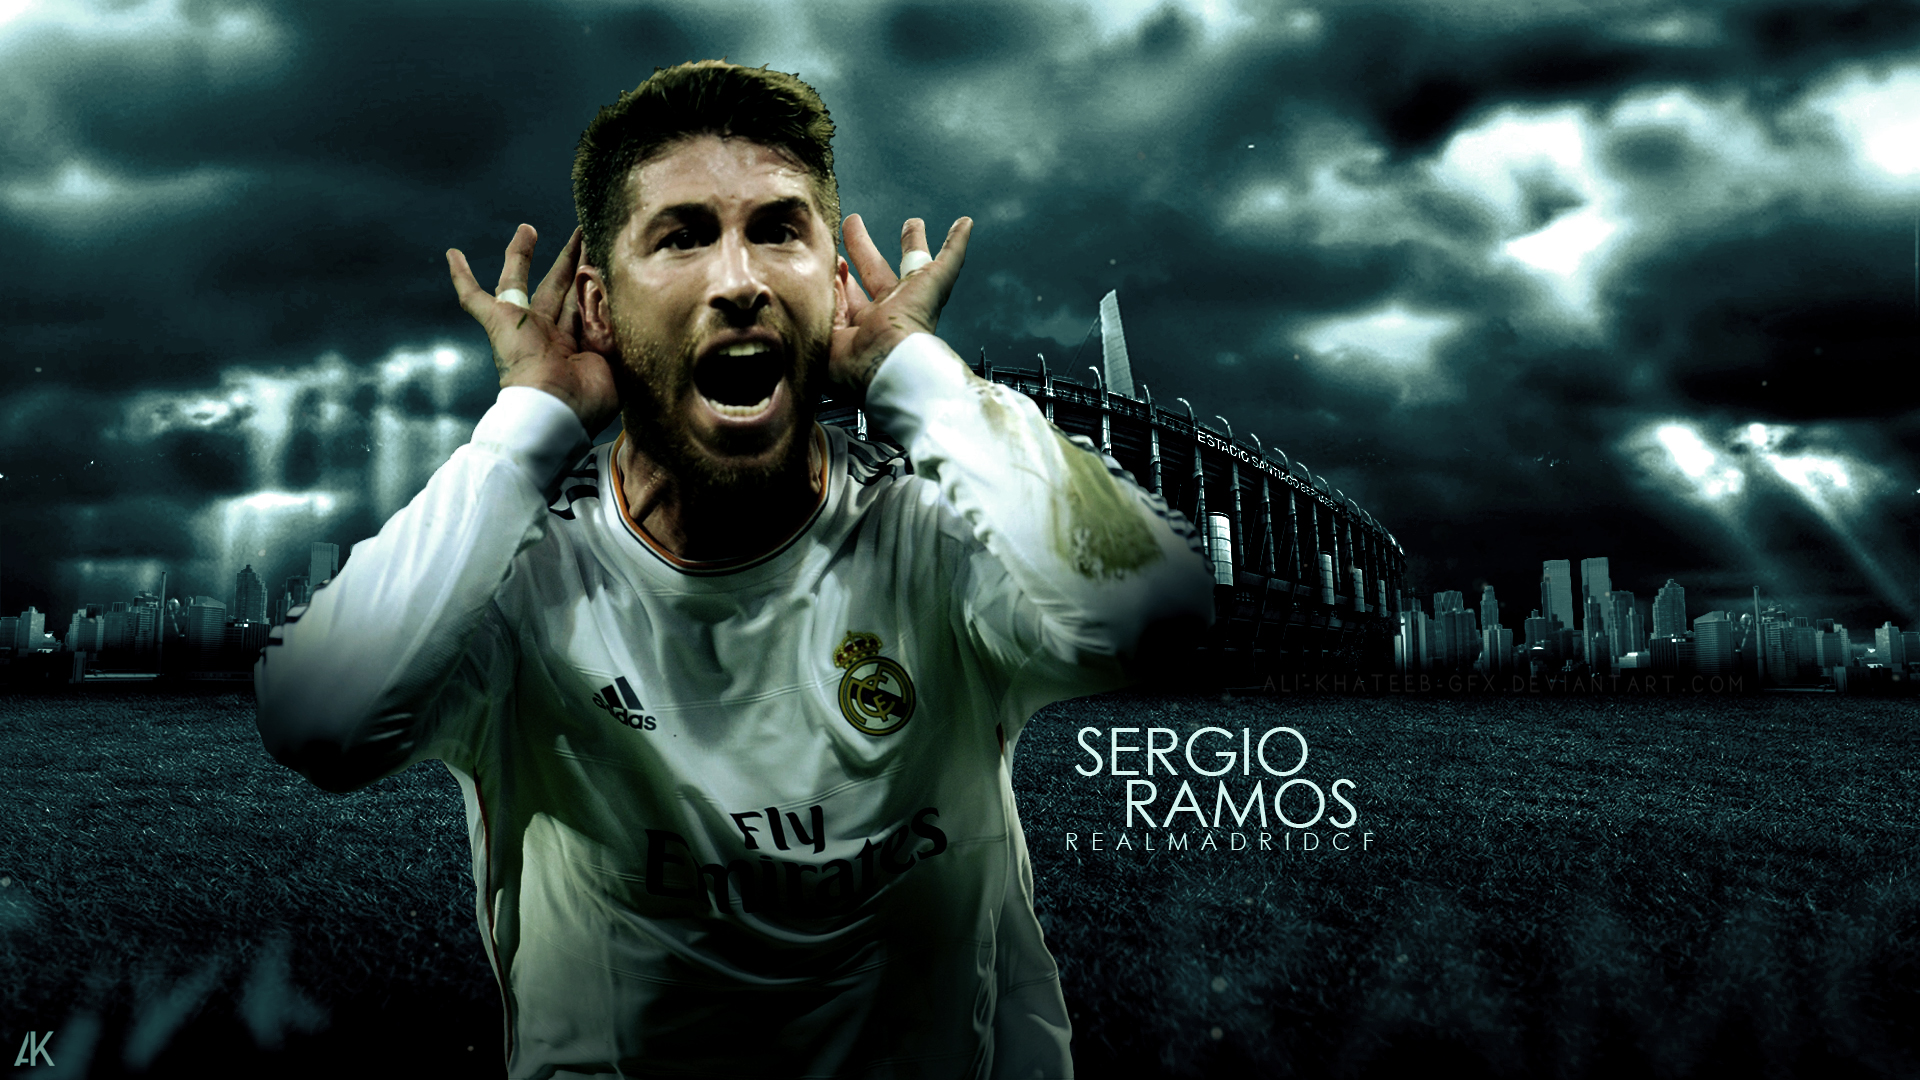 Sergio Ramos Real Madrid C F By Ali Khateeb Gfx On